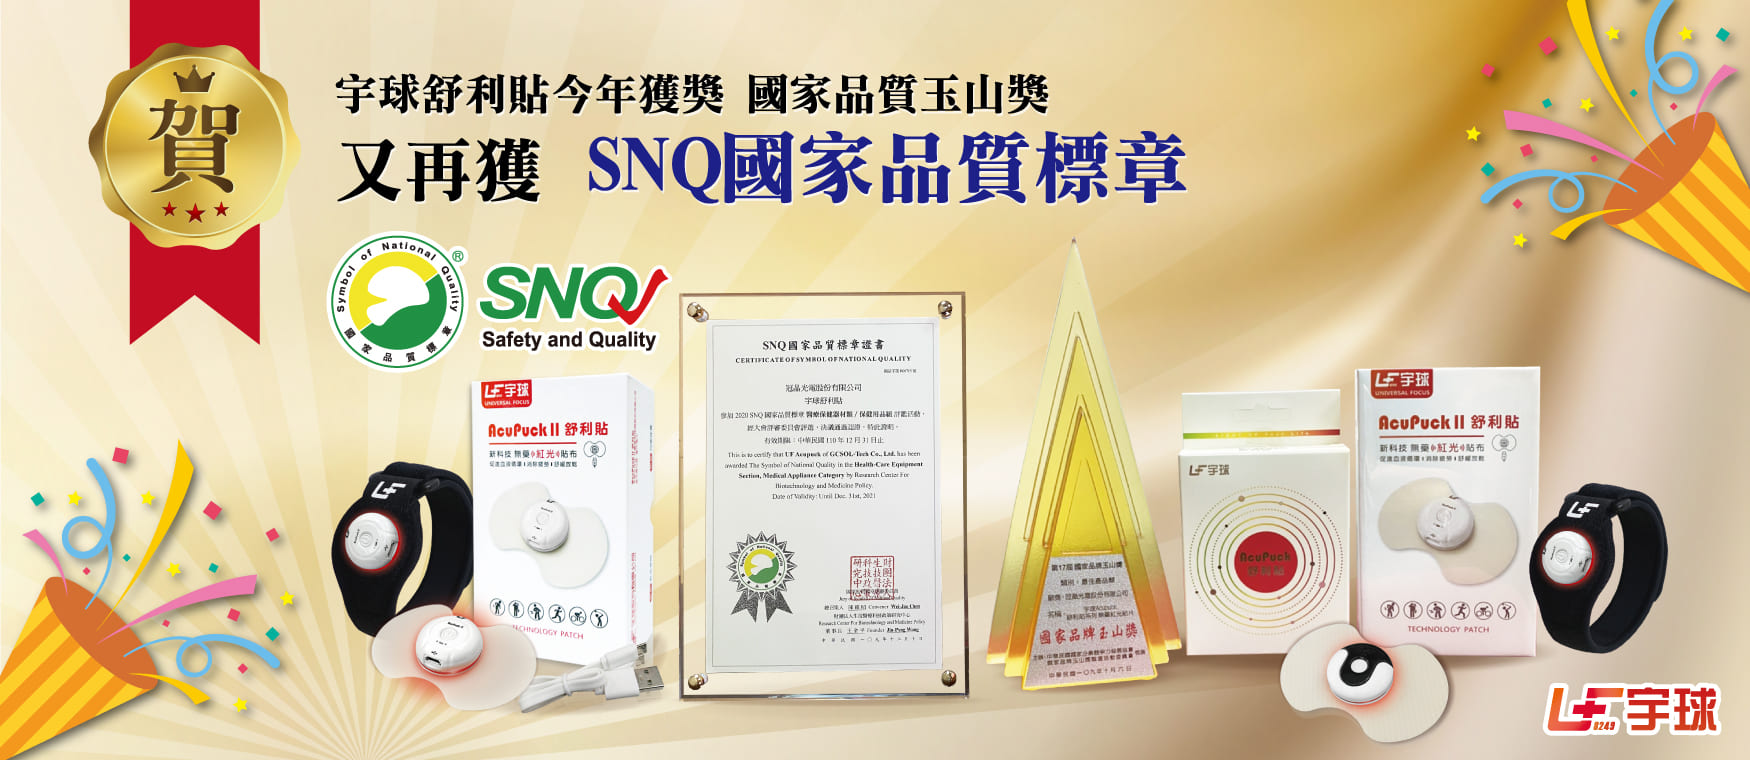 SNQ+ Yushan Award banner